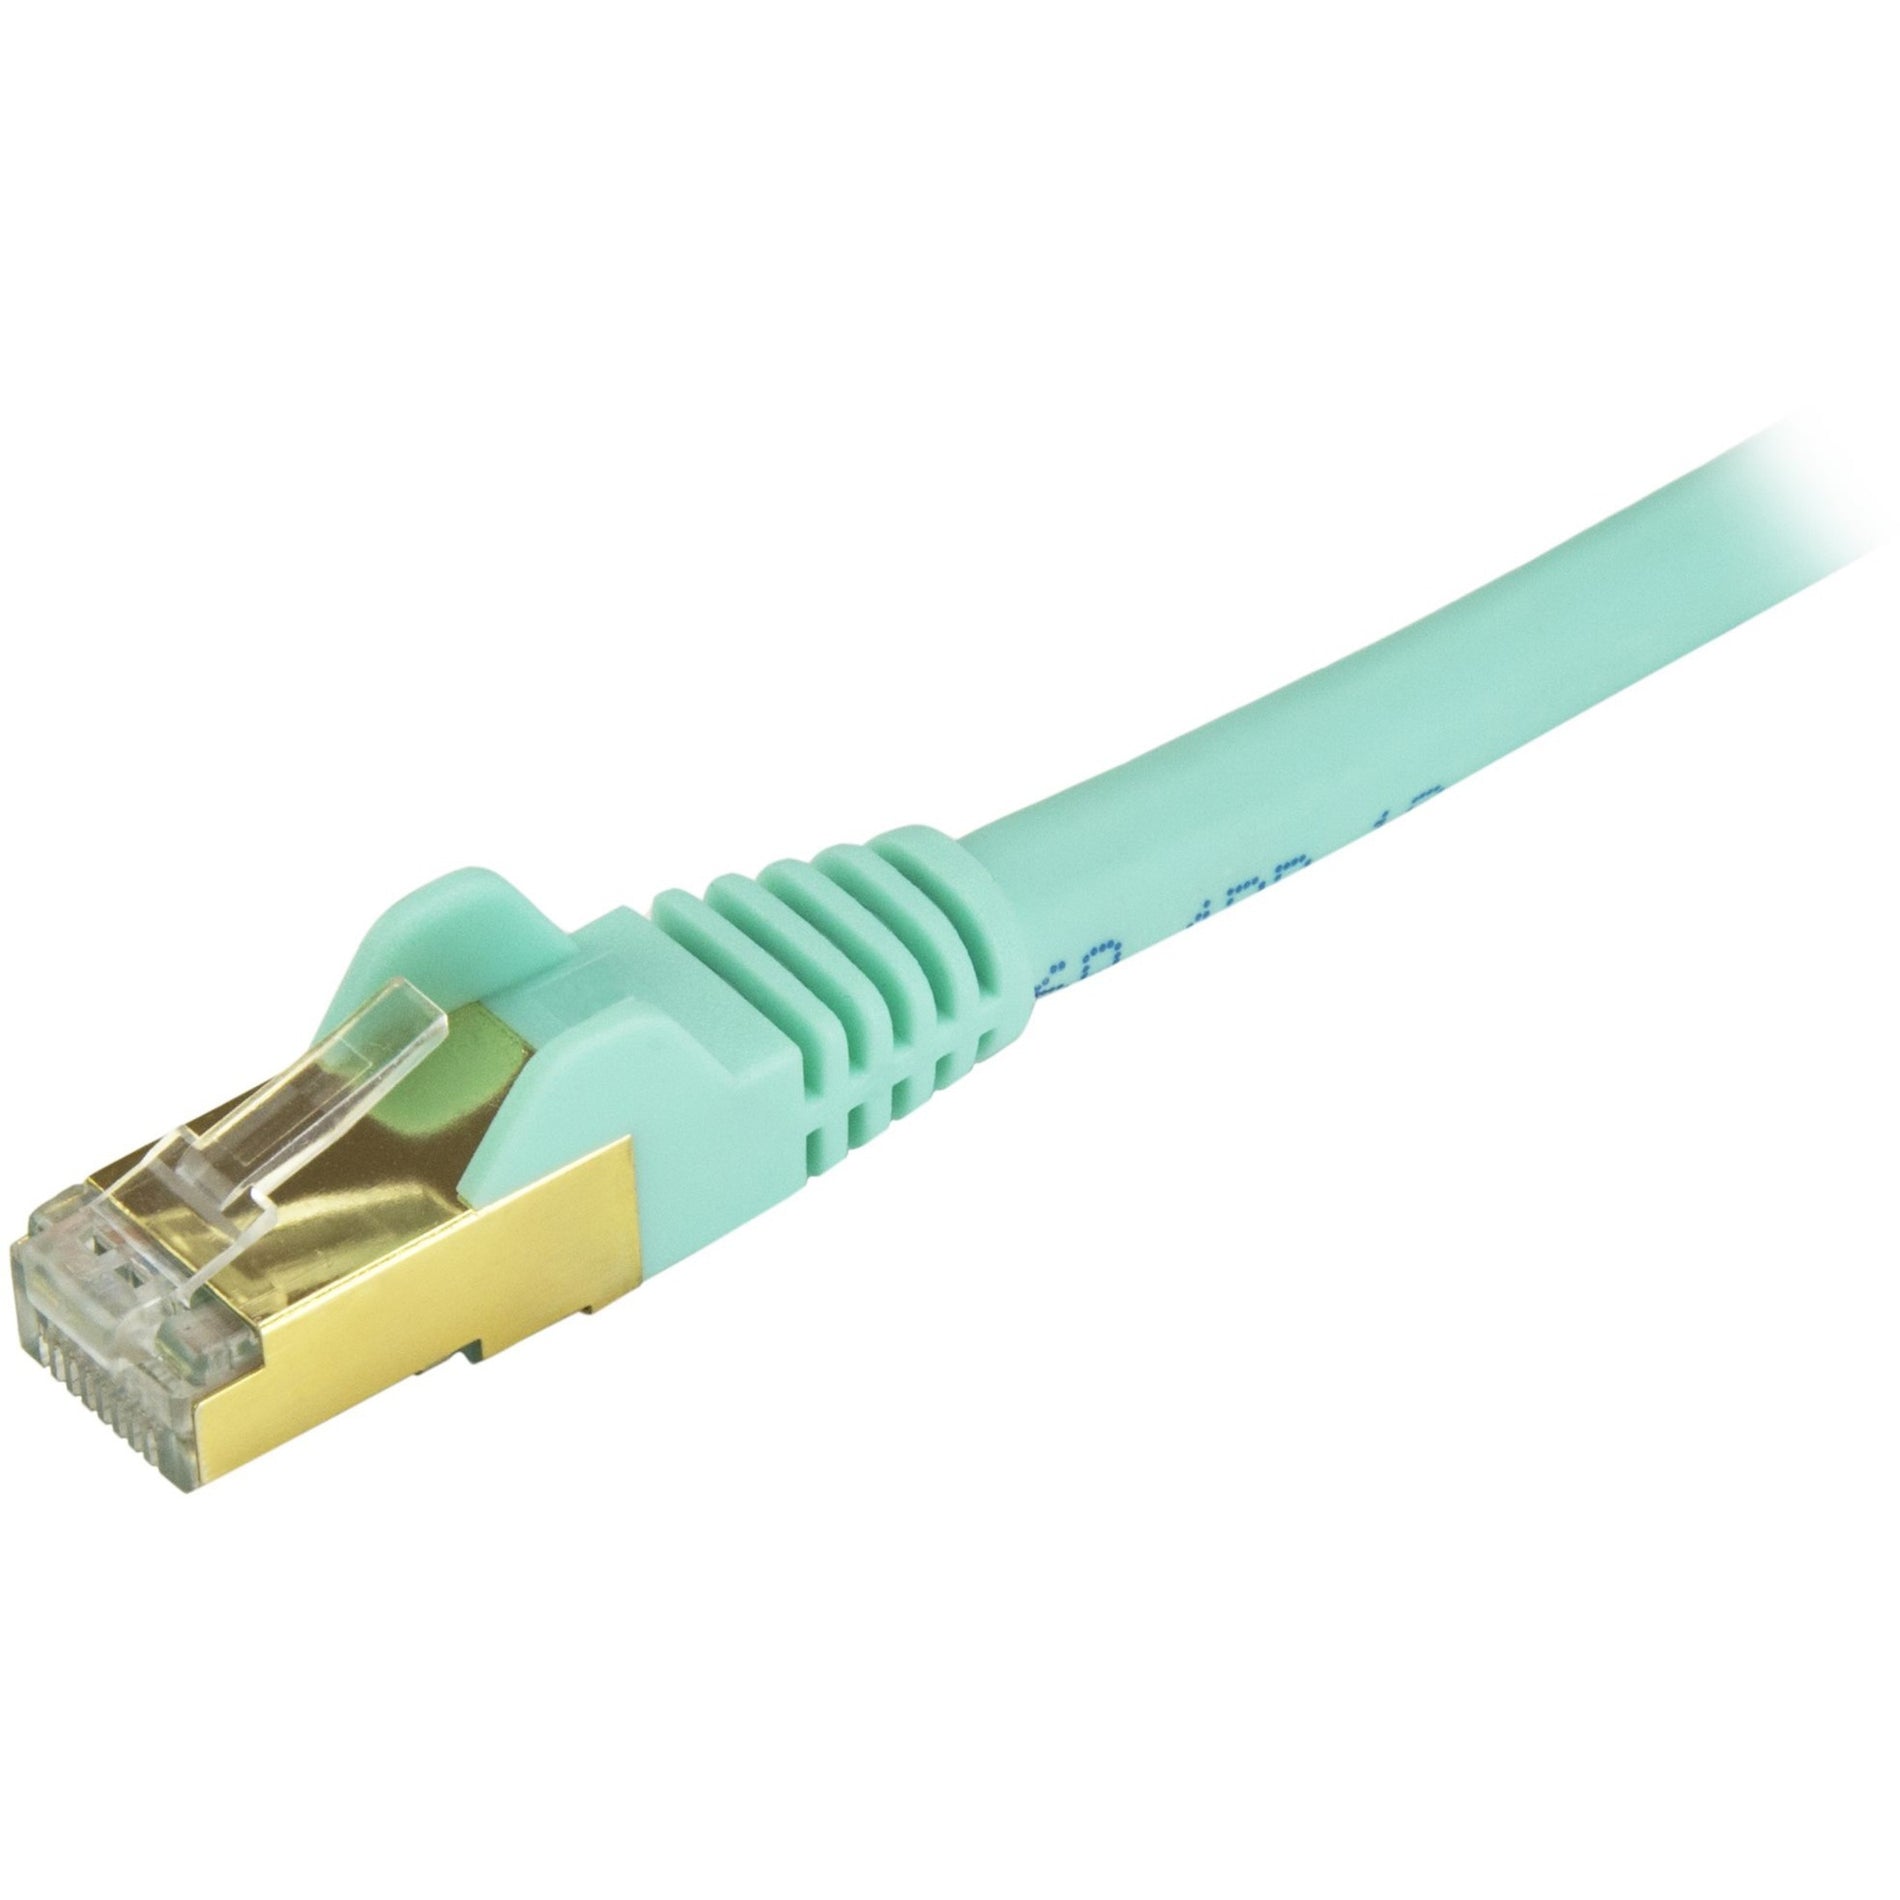 StarTech.com C6ASPAT3AQ Cat6a Ethernet Patch Cable - Shielded (STP) - 3 ft., Aqua, Snagless RJ45 Ethernet Cord